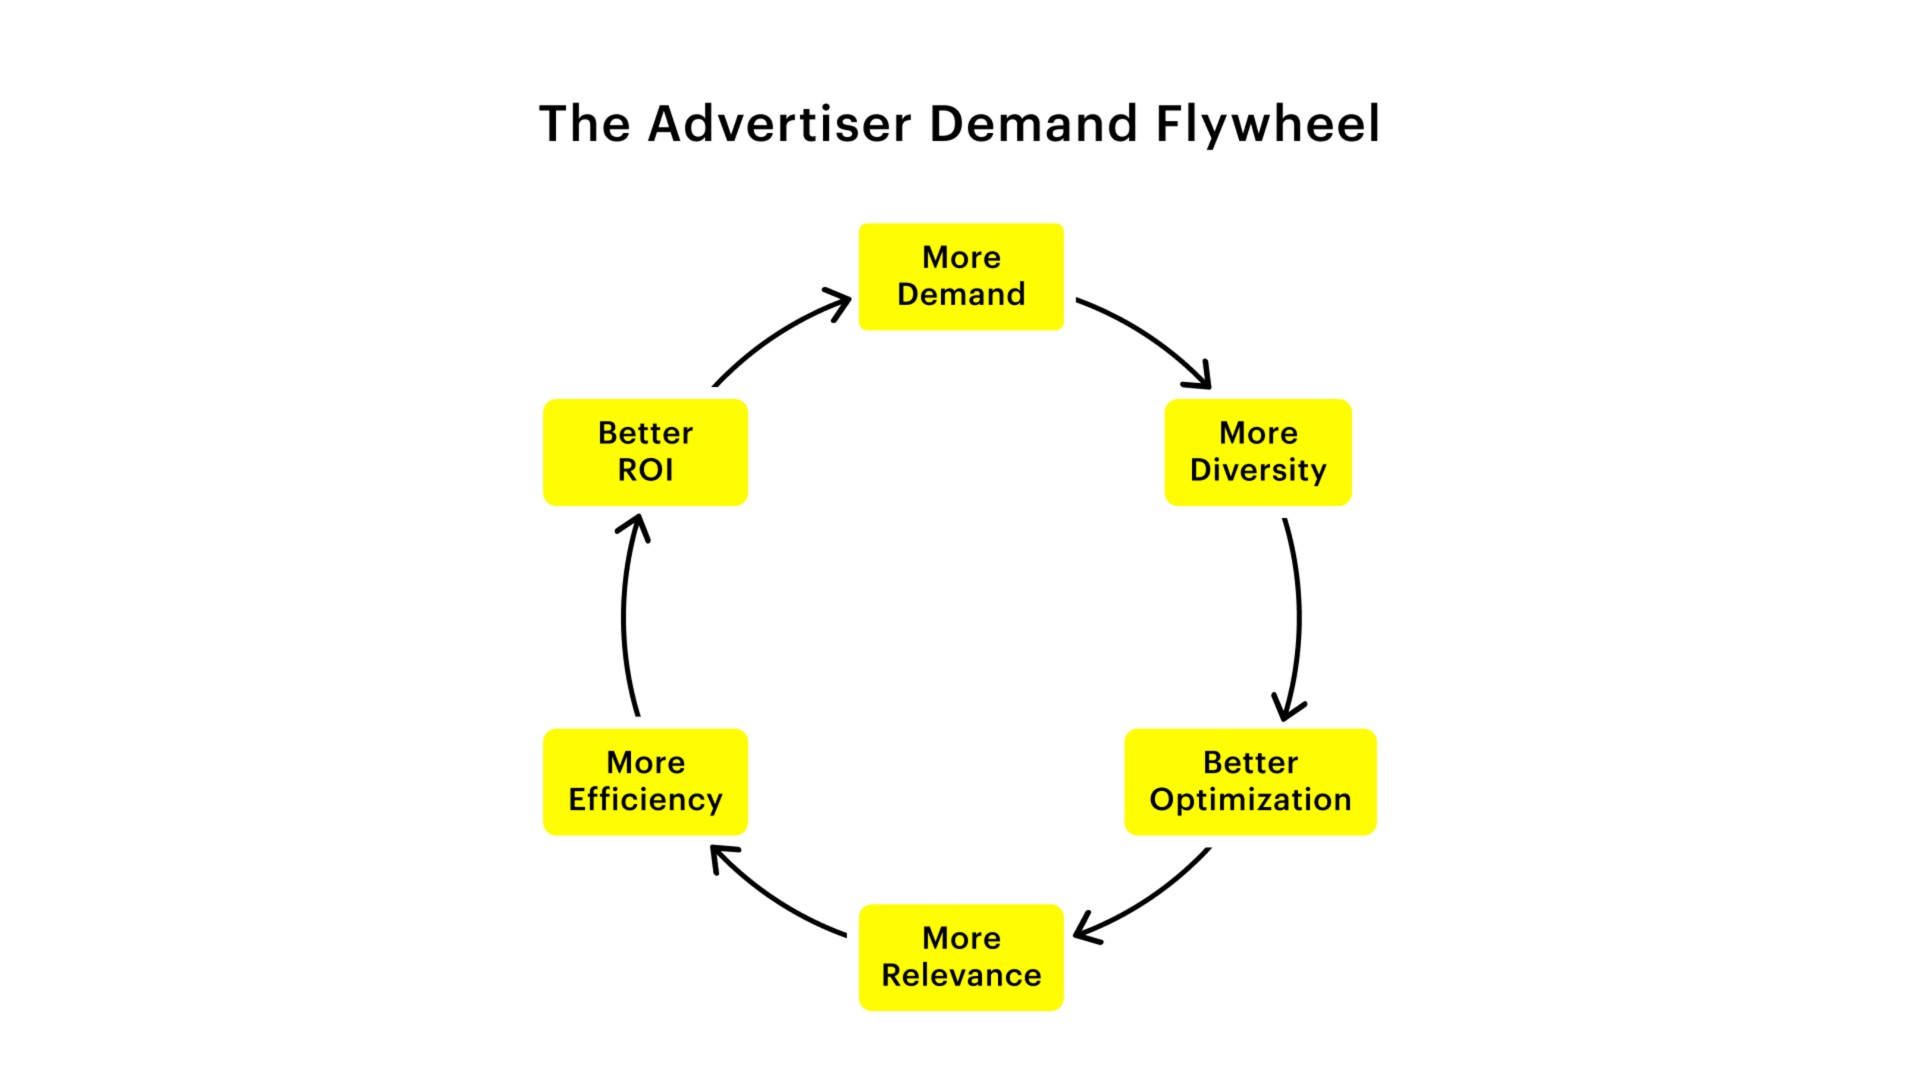 the advertiser demand flywheel | Snap Inc